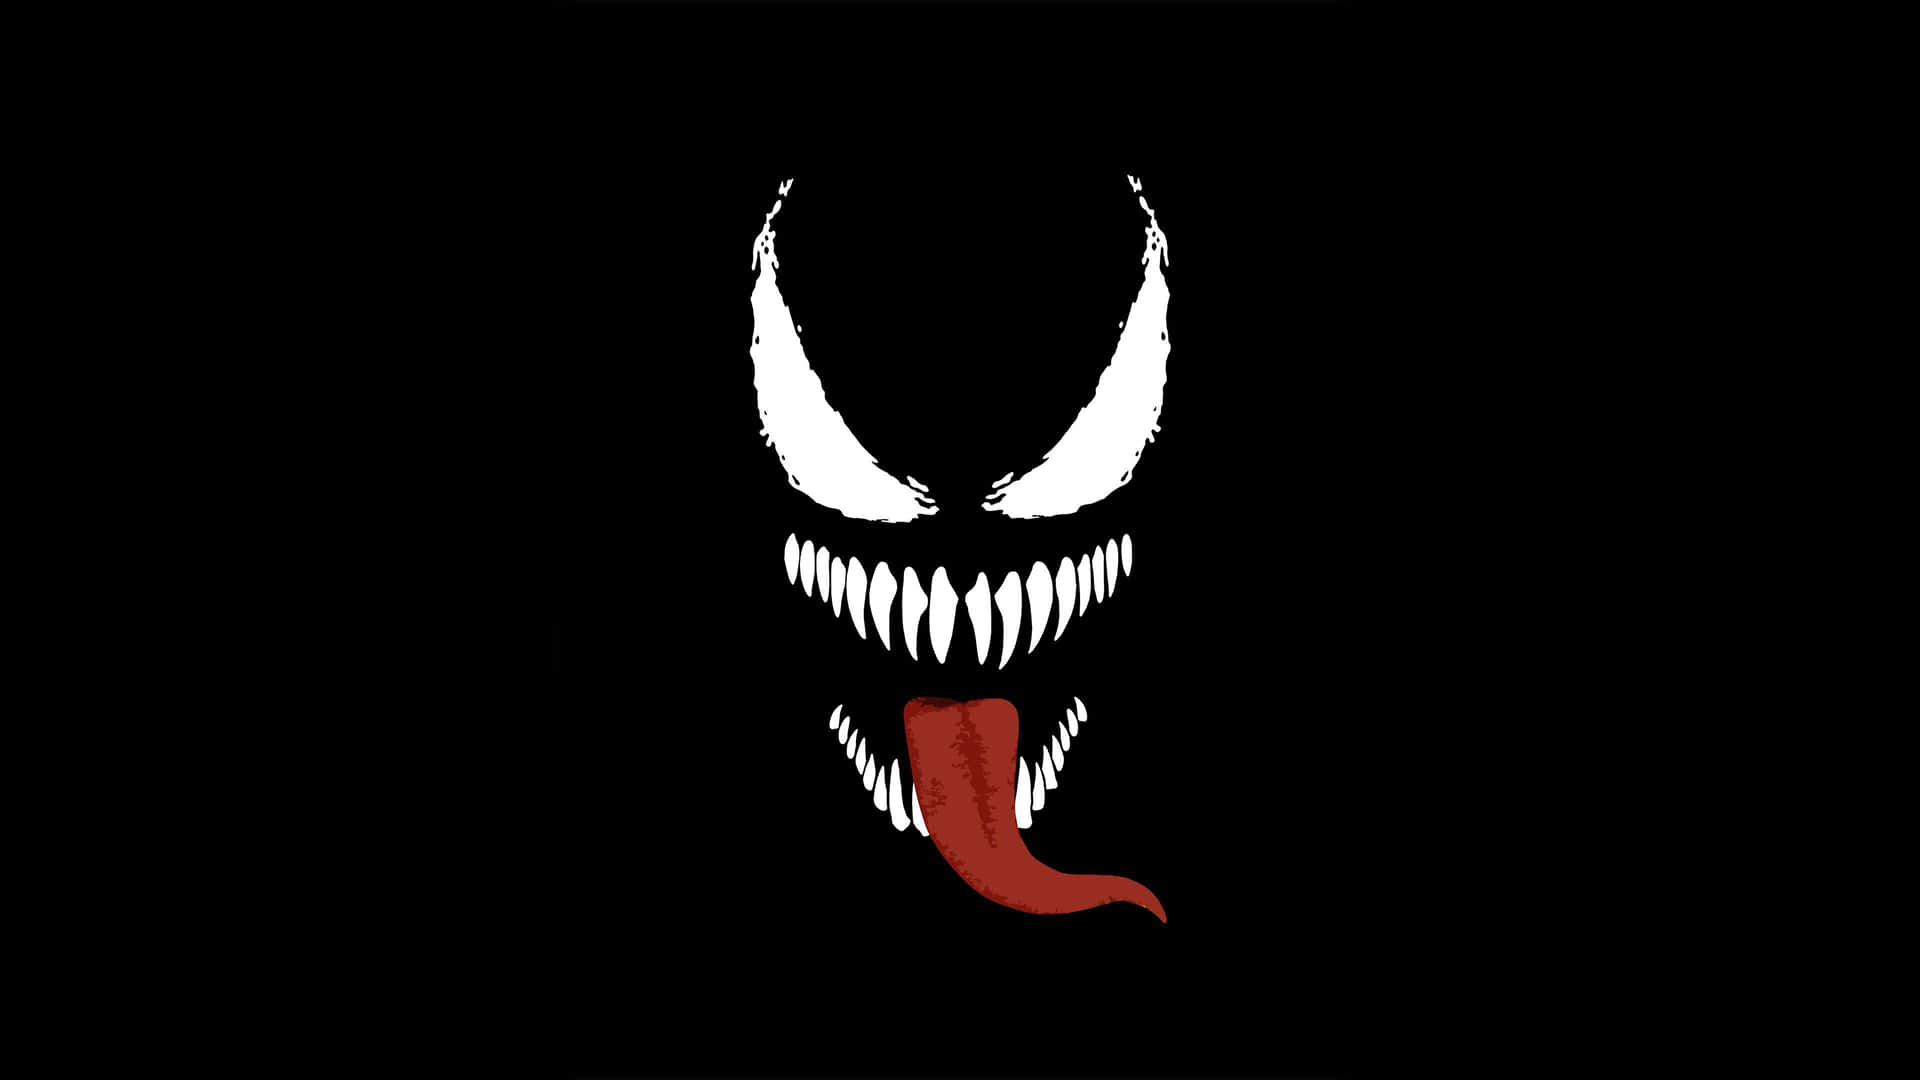 Venom Logo On A Black Background Wallpaper